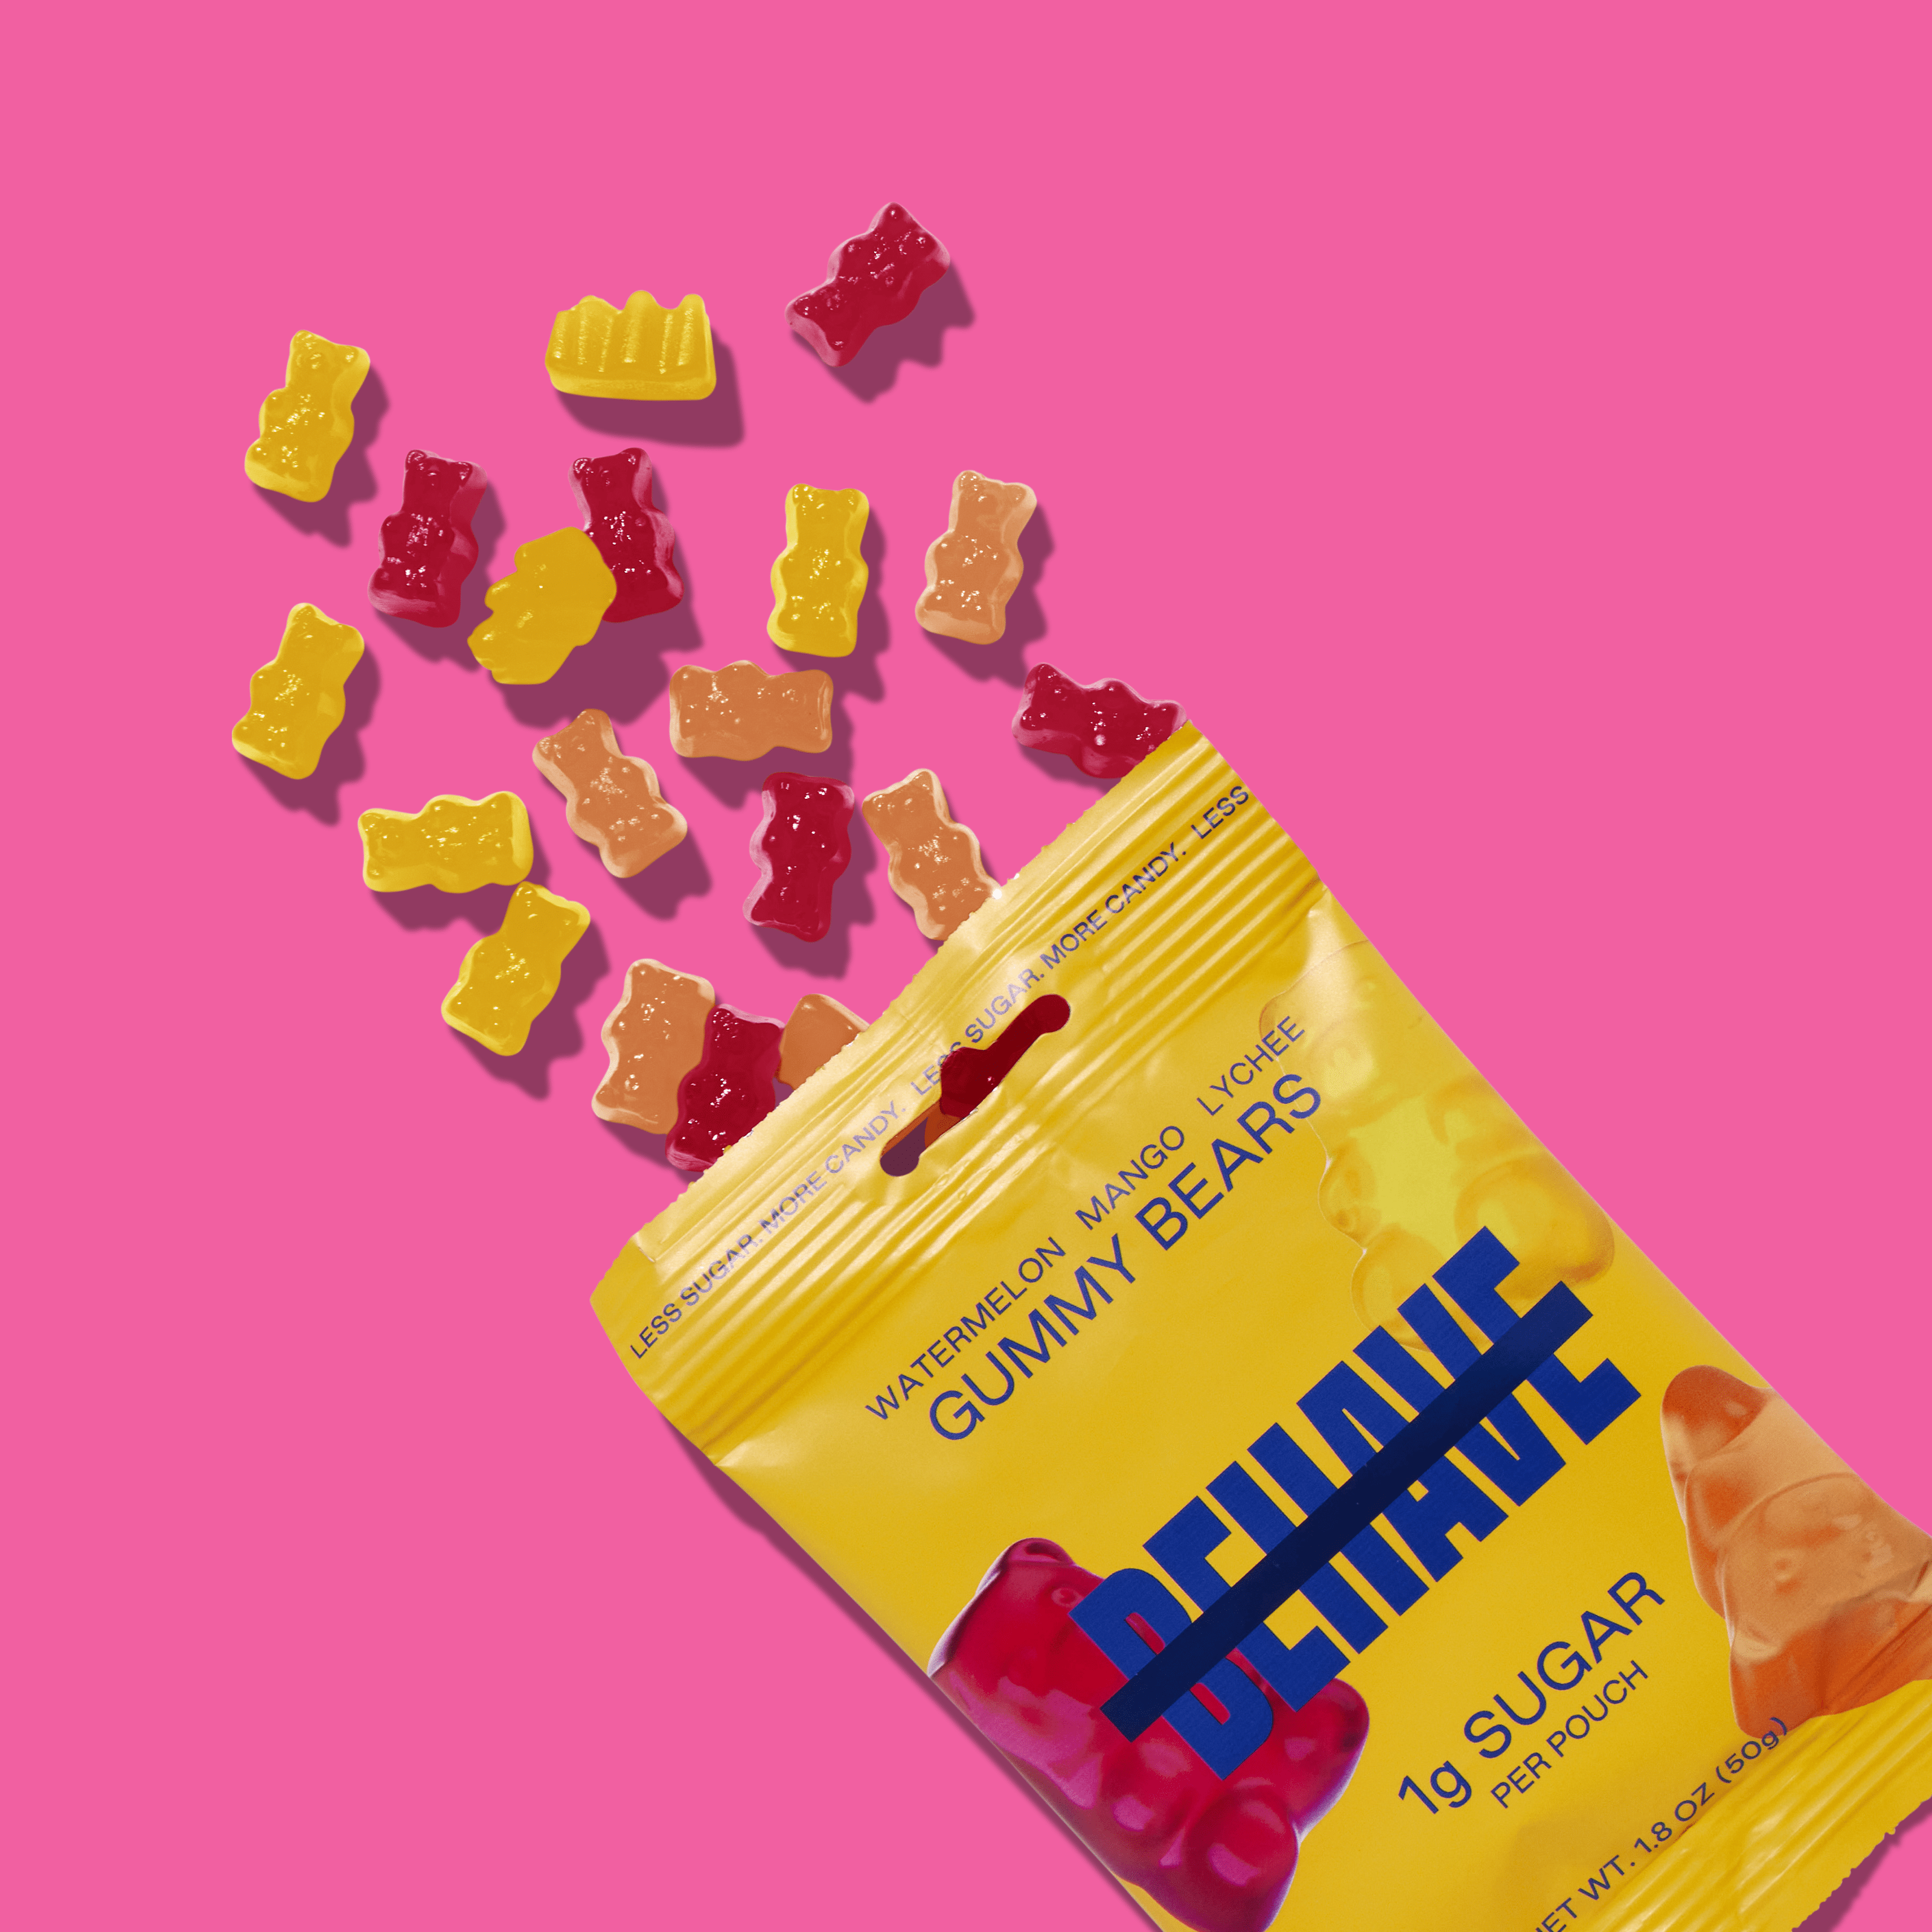 Sweet Gummy Bears (6-Pack) - BEHAVE - Consumerhaus